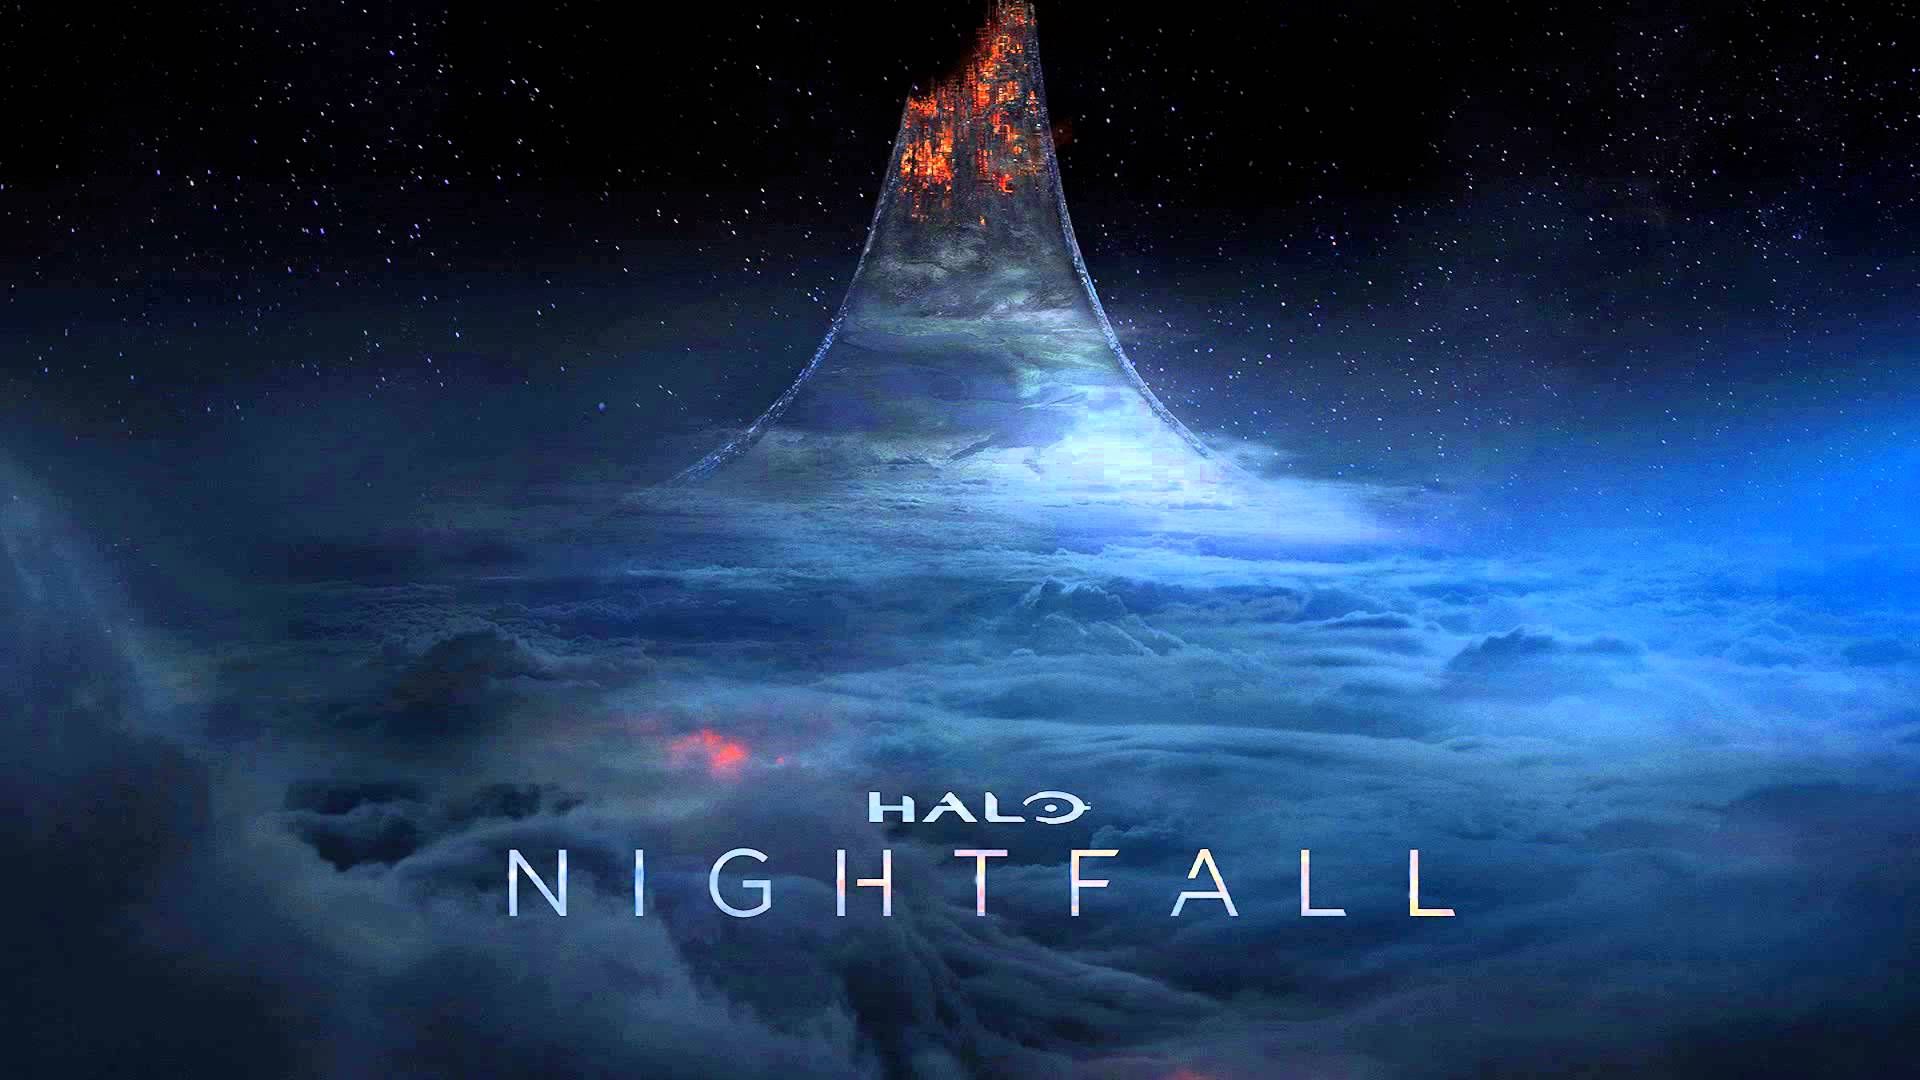 High Resolution Wallpaper | Halo: Nightfall 1920x1080 px